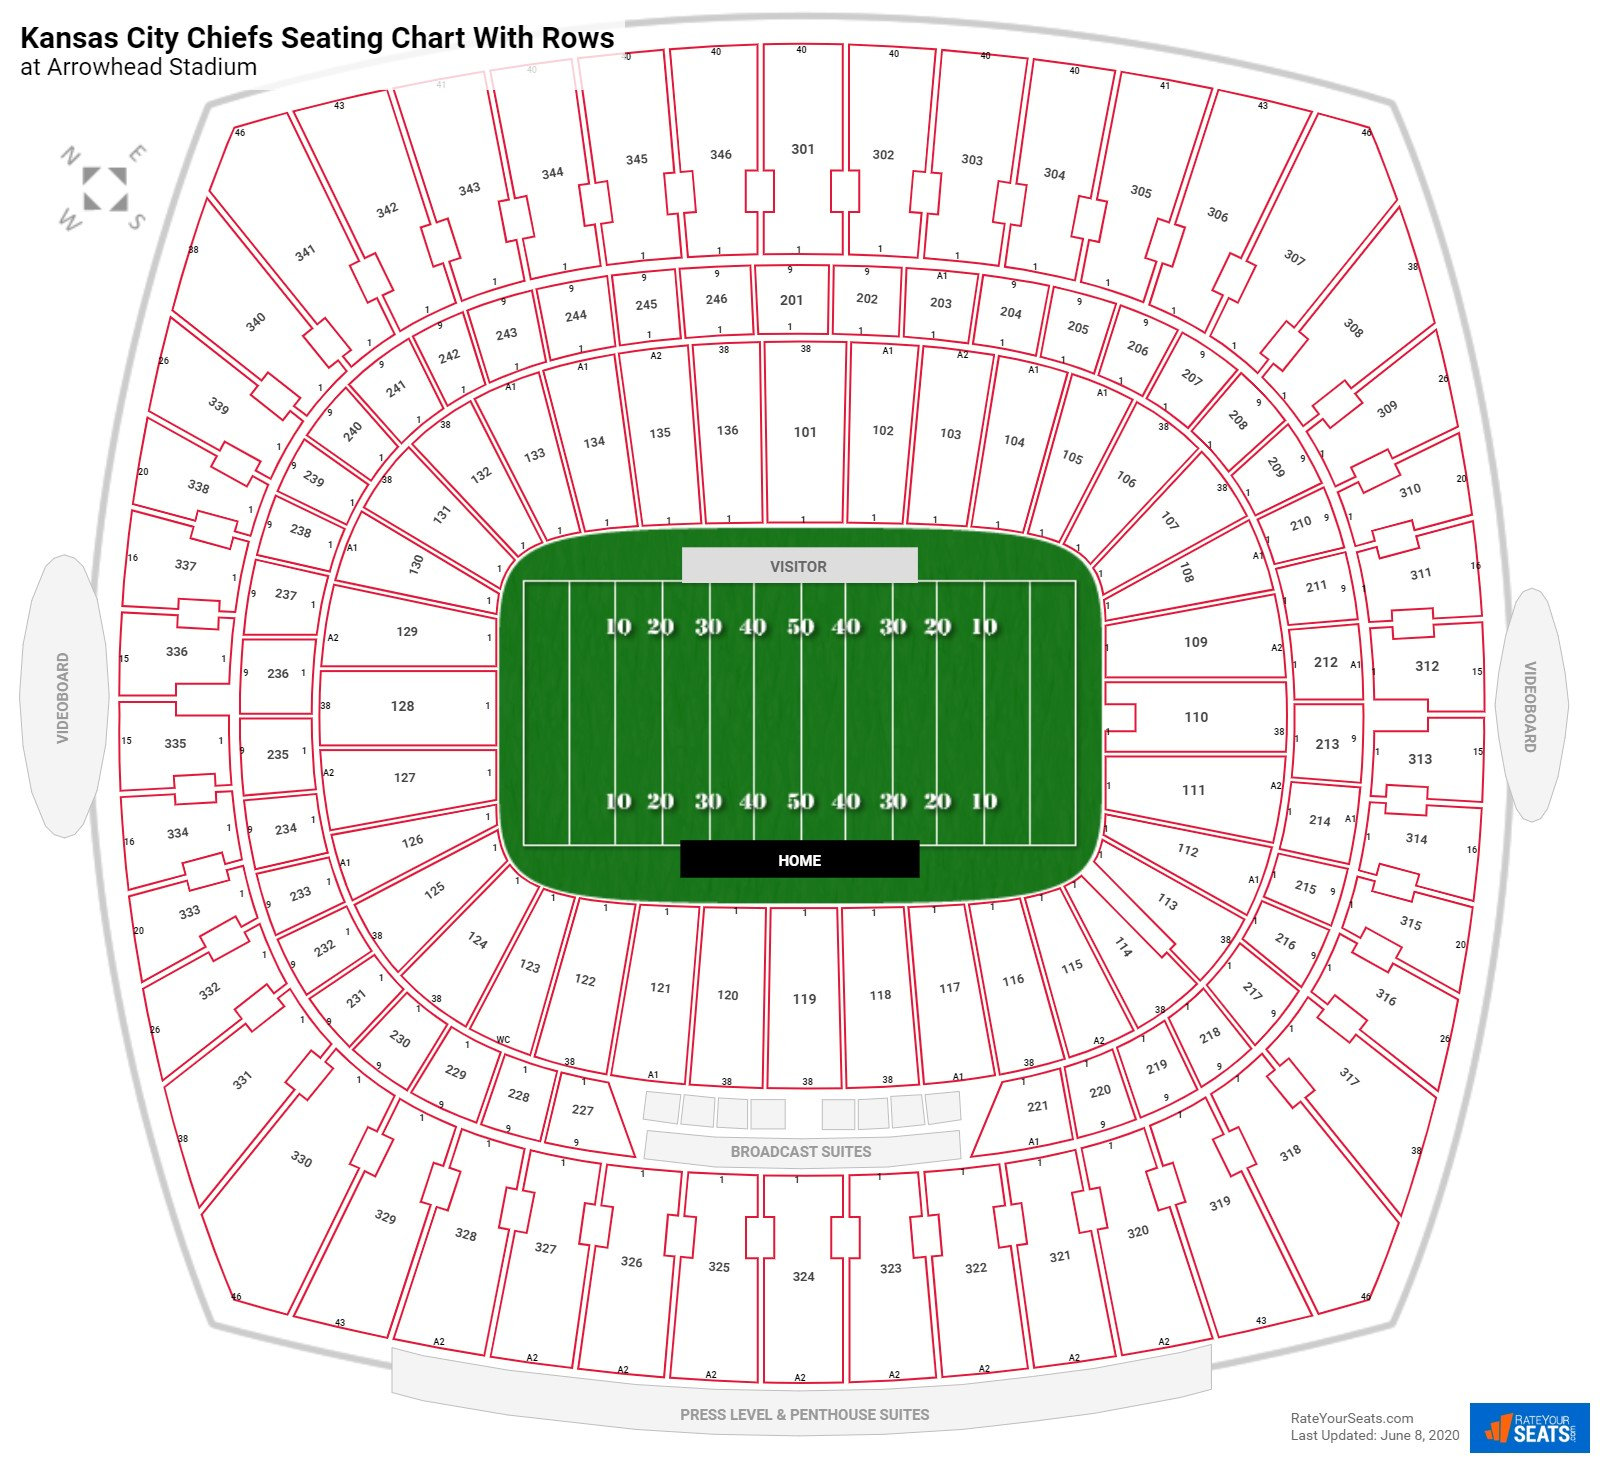 Arrowhead Stadium seating chart with row numbers